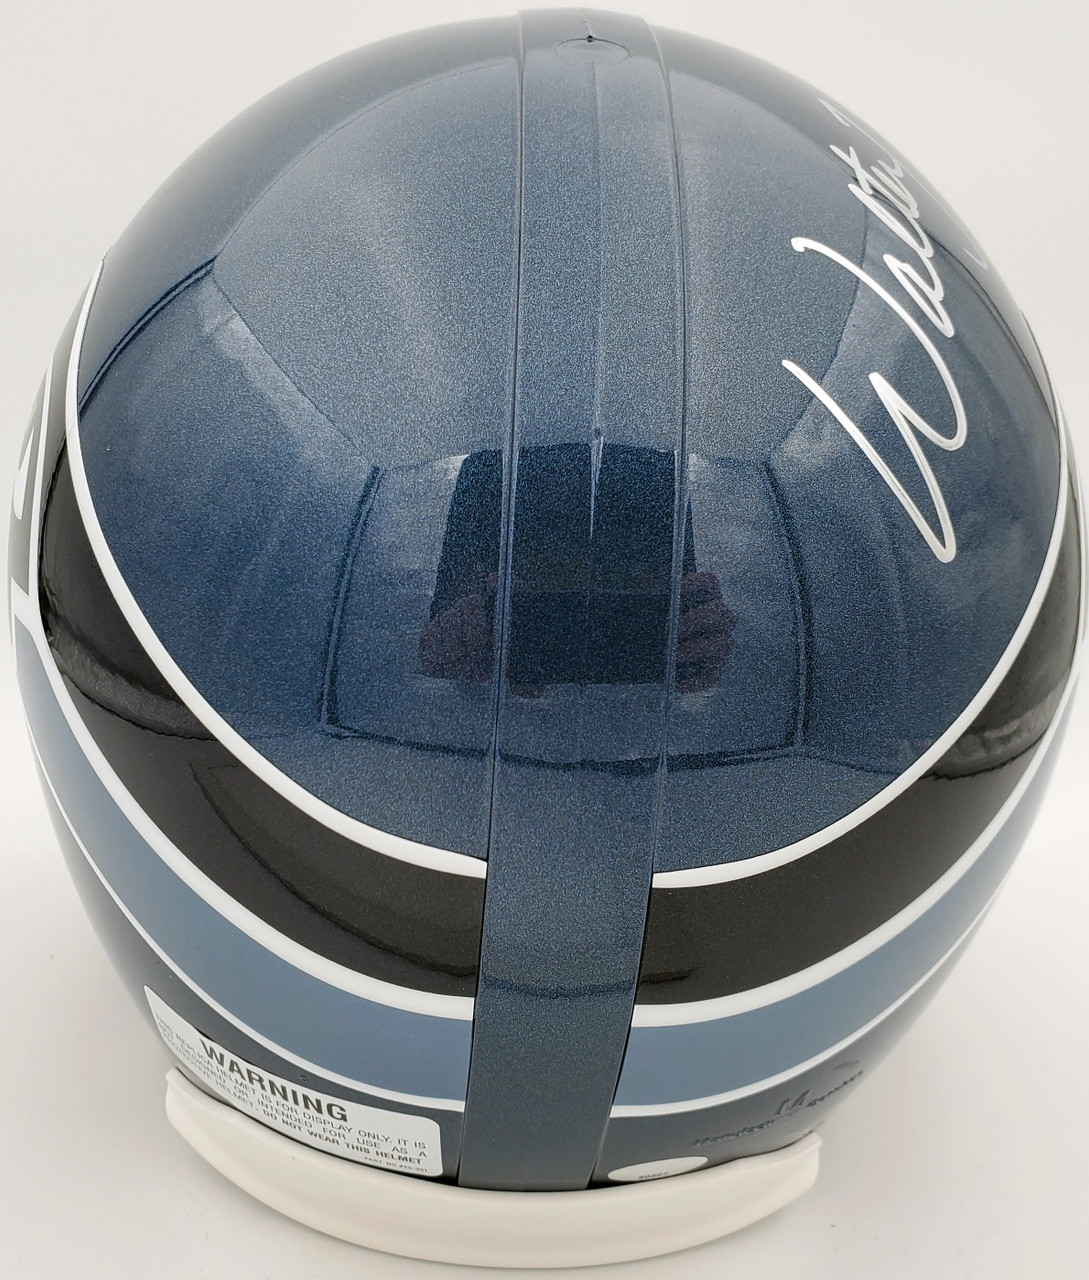 Warren Moon Autographed Seattle Seahawks Full Size Gray Replica Throwback  Helmet HOF 06 MCS Holo Stock #187028